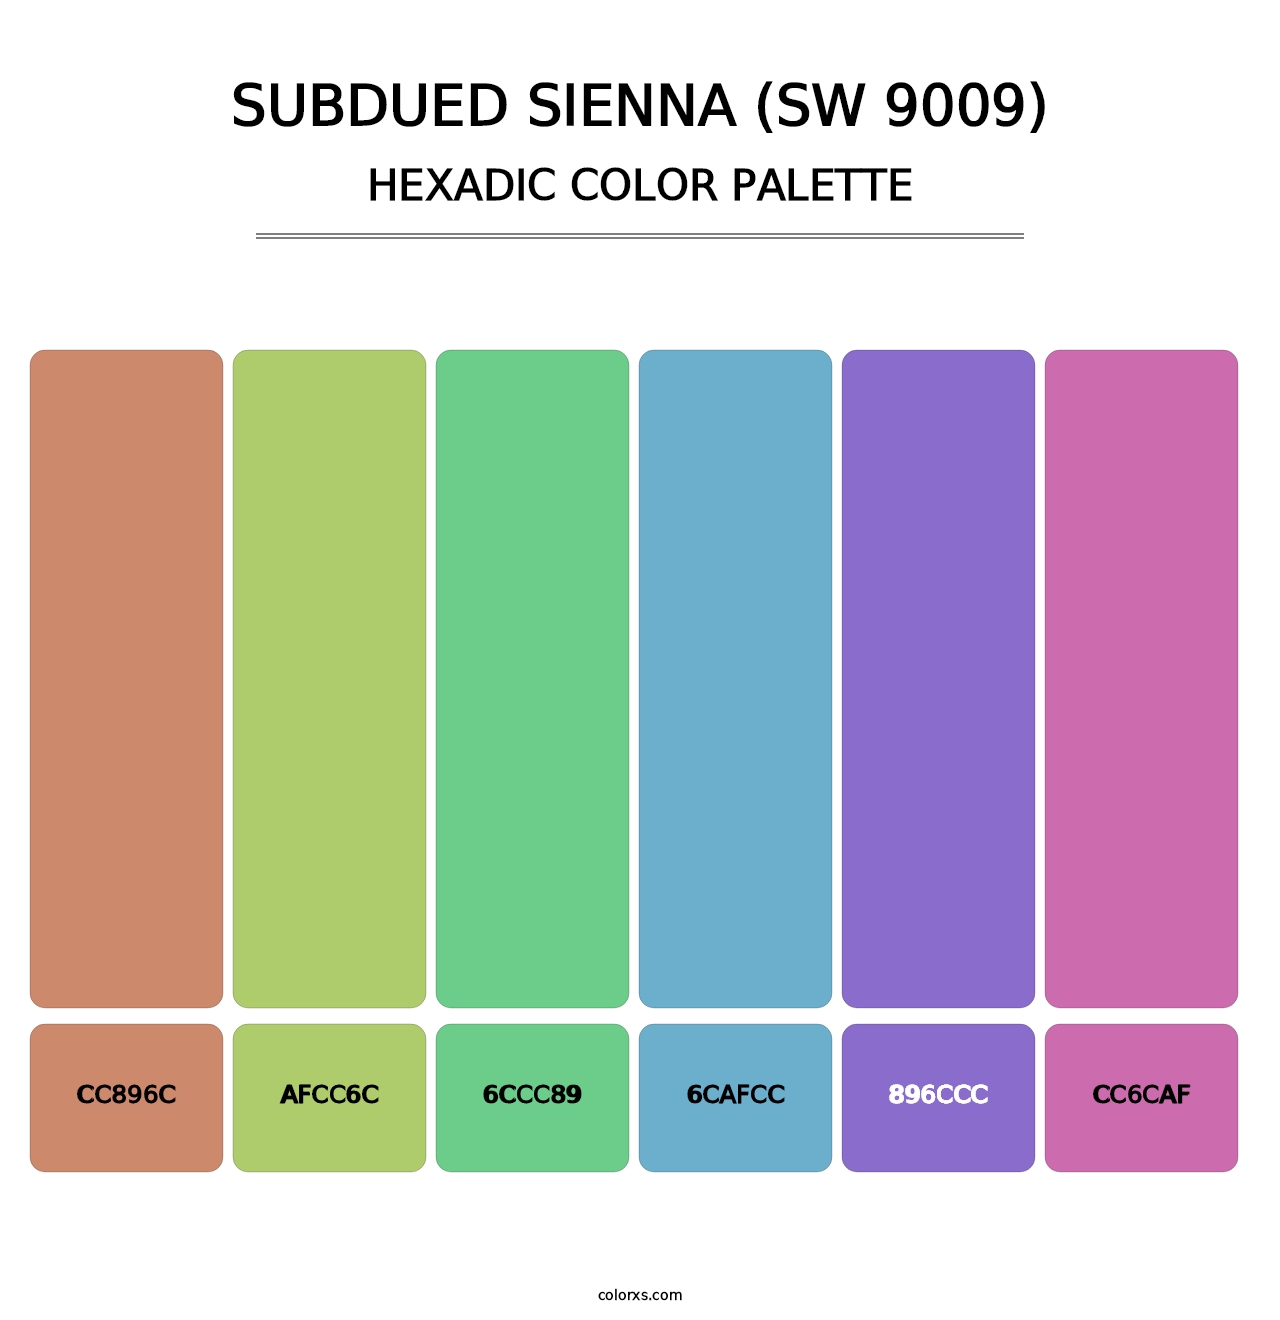 Subdued Sienna (SW 9009) - Hexadic Color Palette